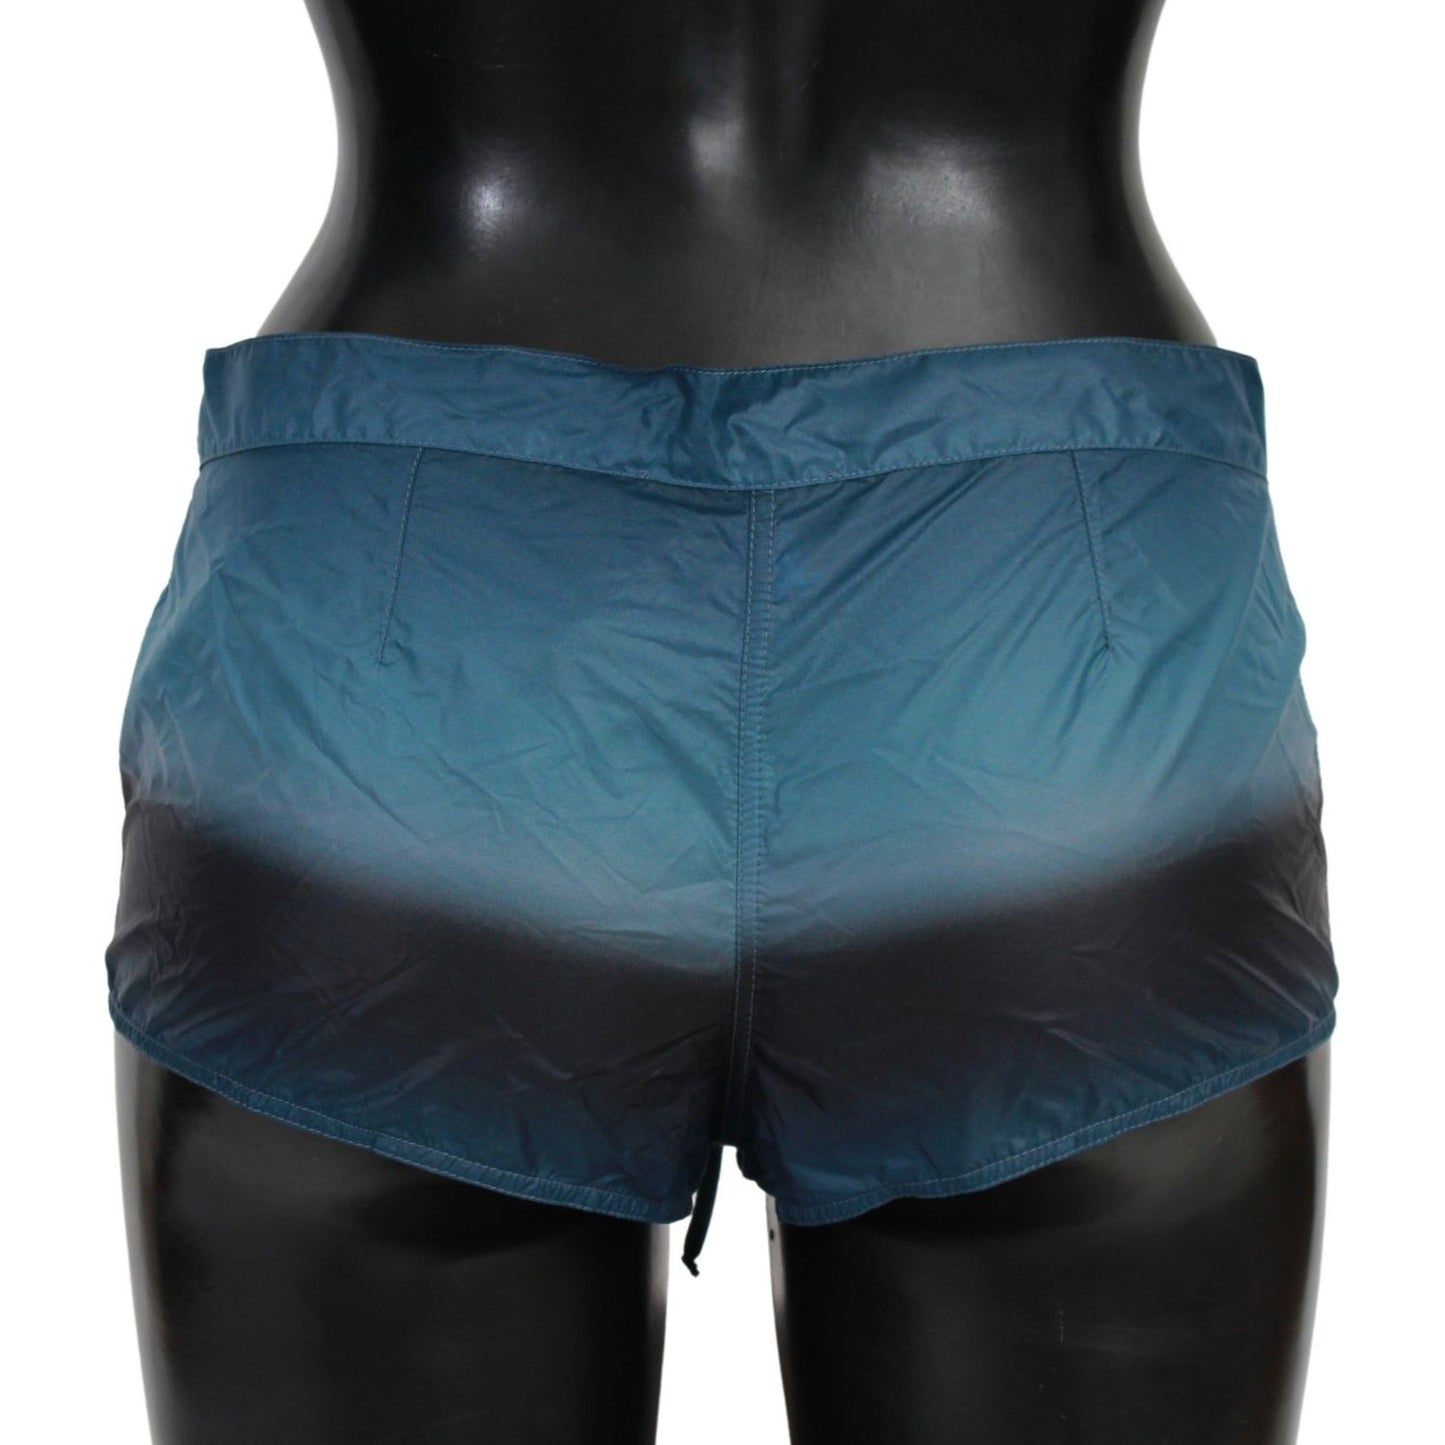 Ermanno Scervino Blue Ombre Shorts Beachwear Bikini Swimsuit blue-ombre-shorts-beachwear-bikini-swimsuit IMG_0338-f464ac41-ebc.jpg